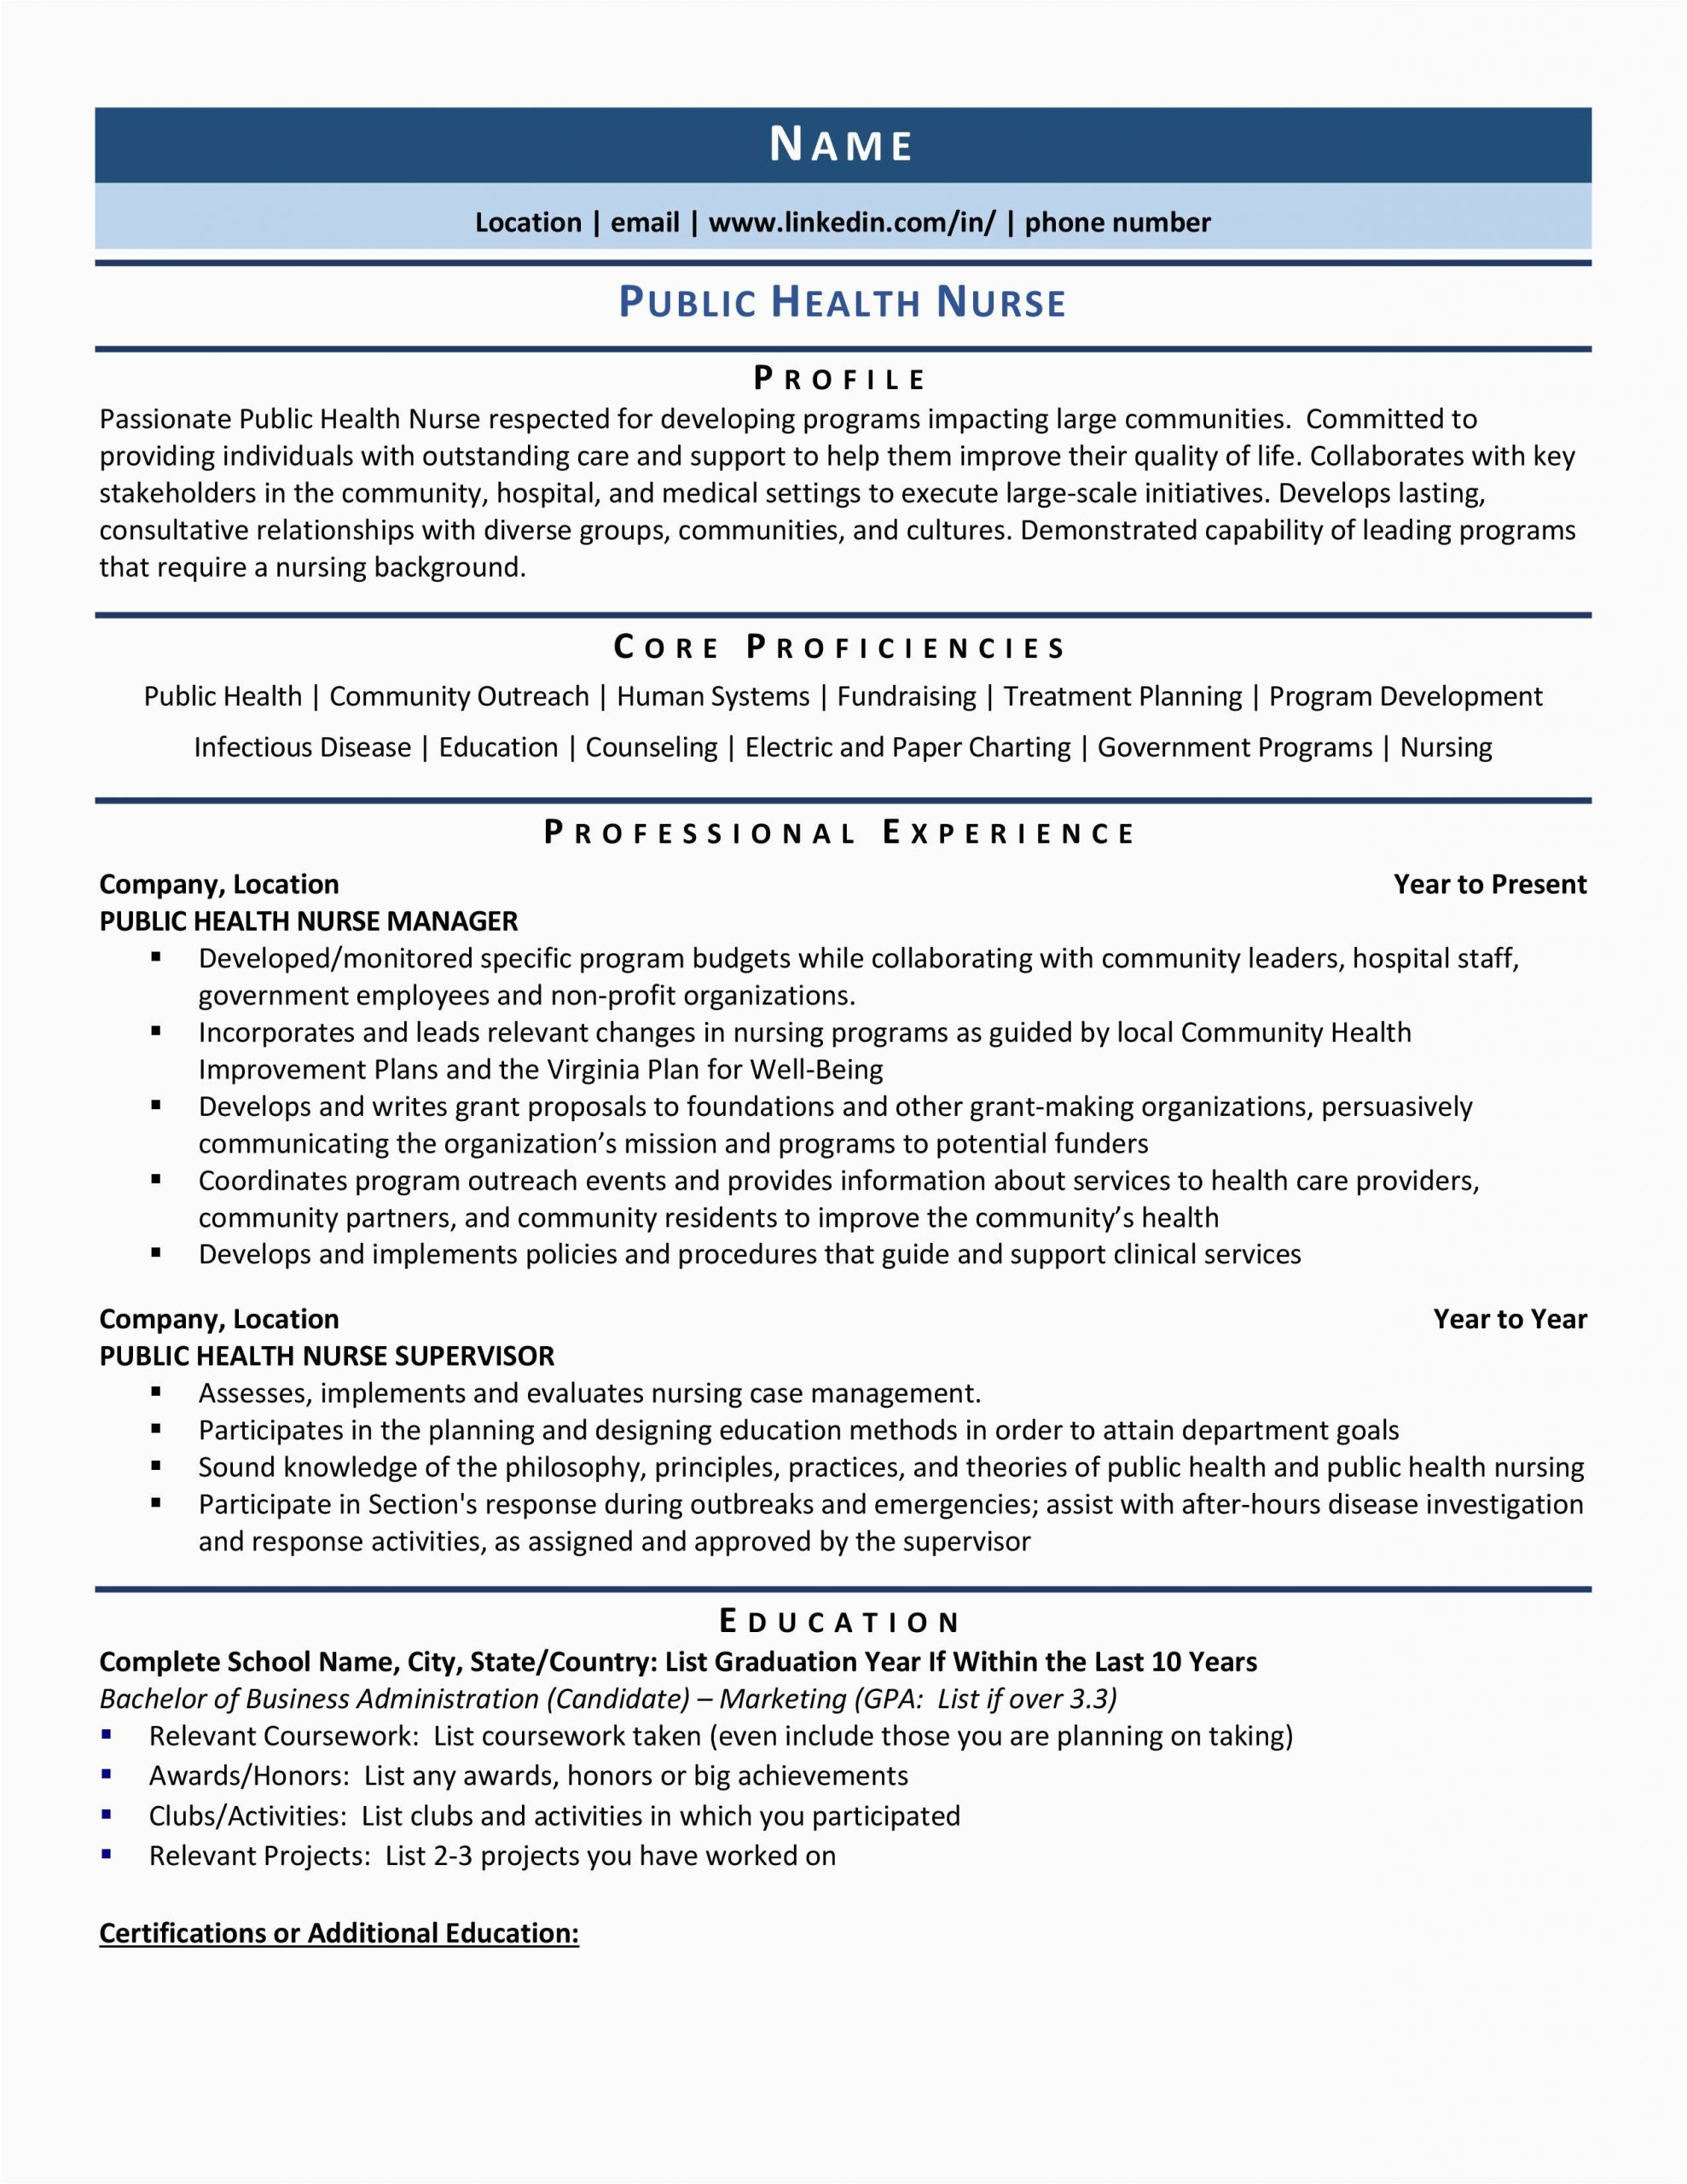 sample resume templates finance tech healthcare marketing legal hospitality hr 2020 9